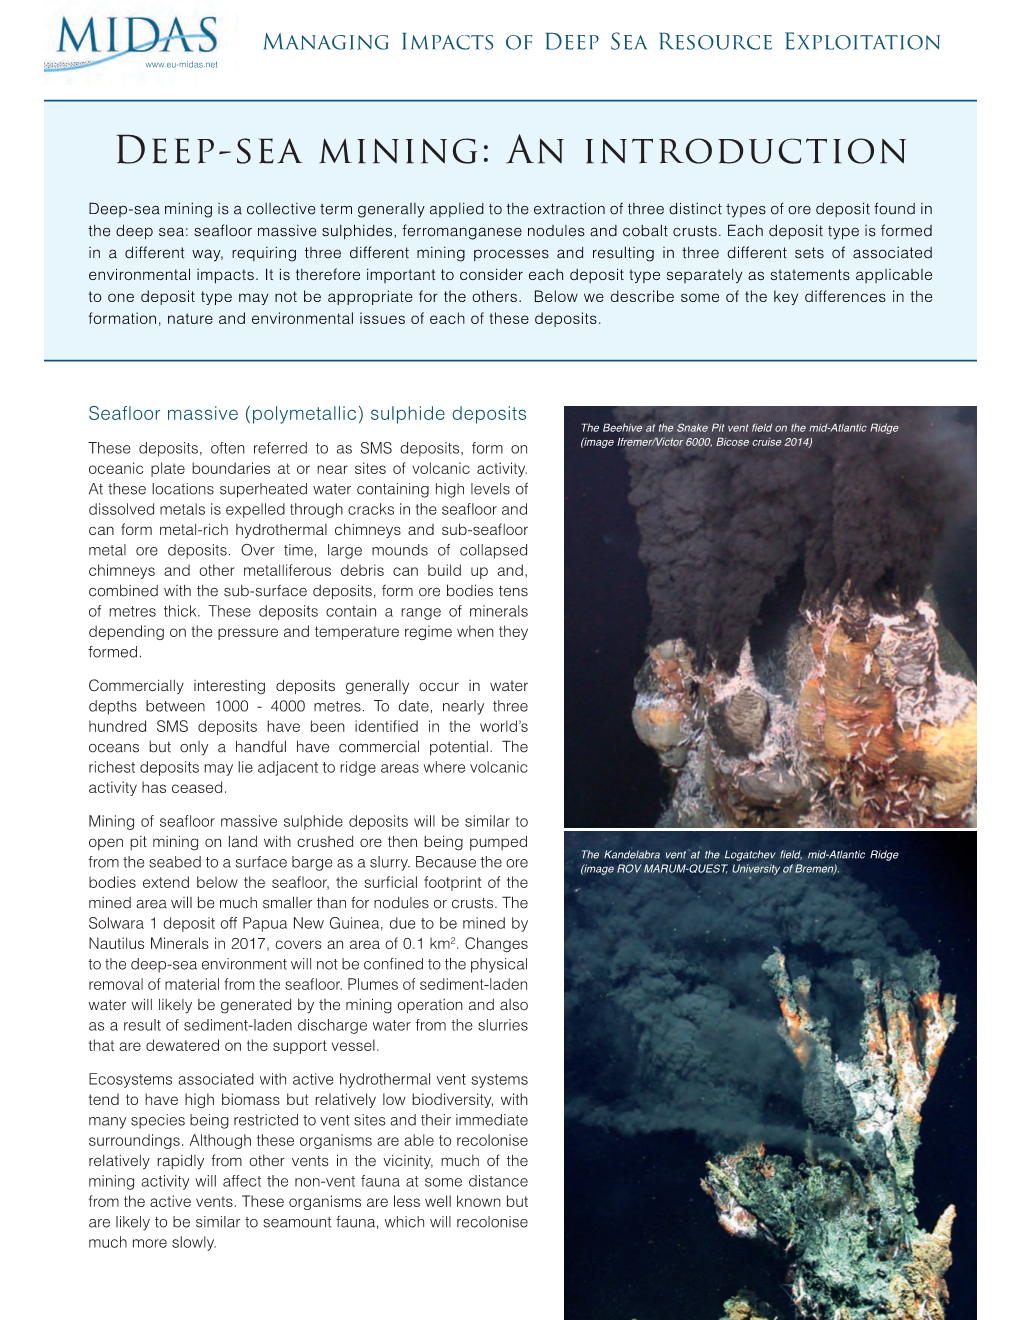 Deep-Sea Mining: an Introduction